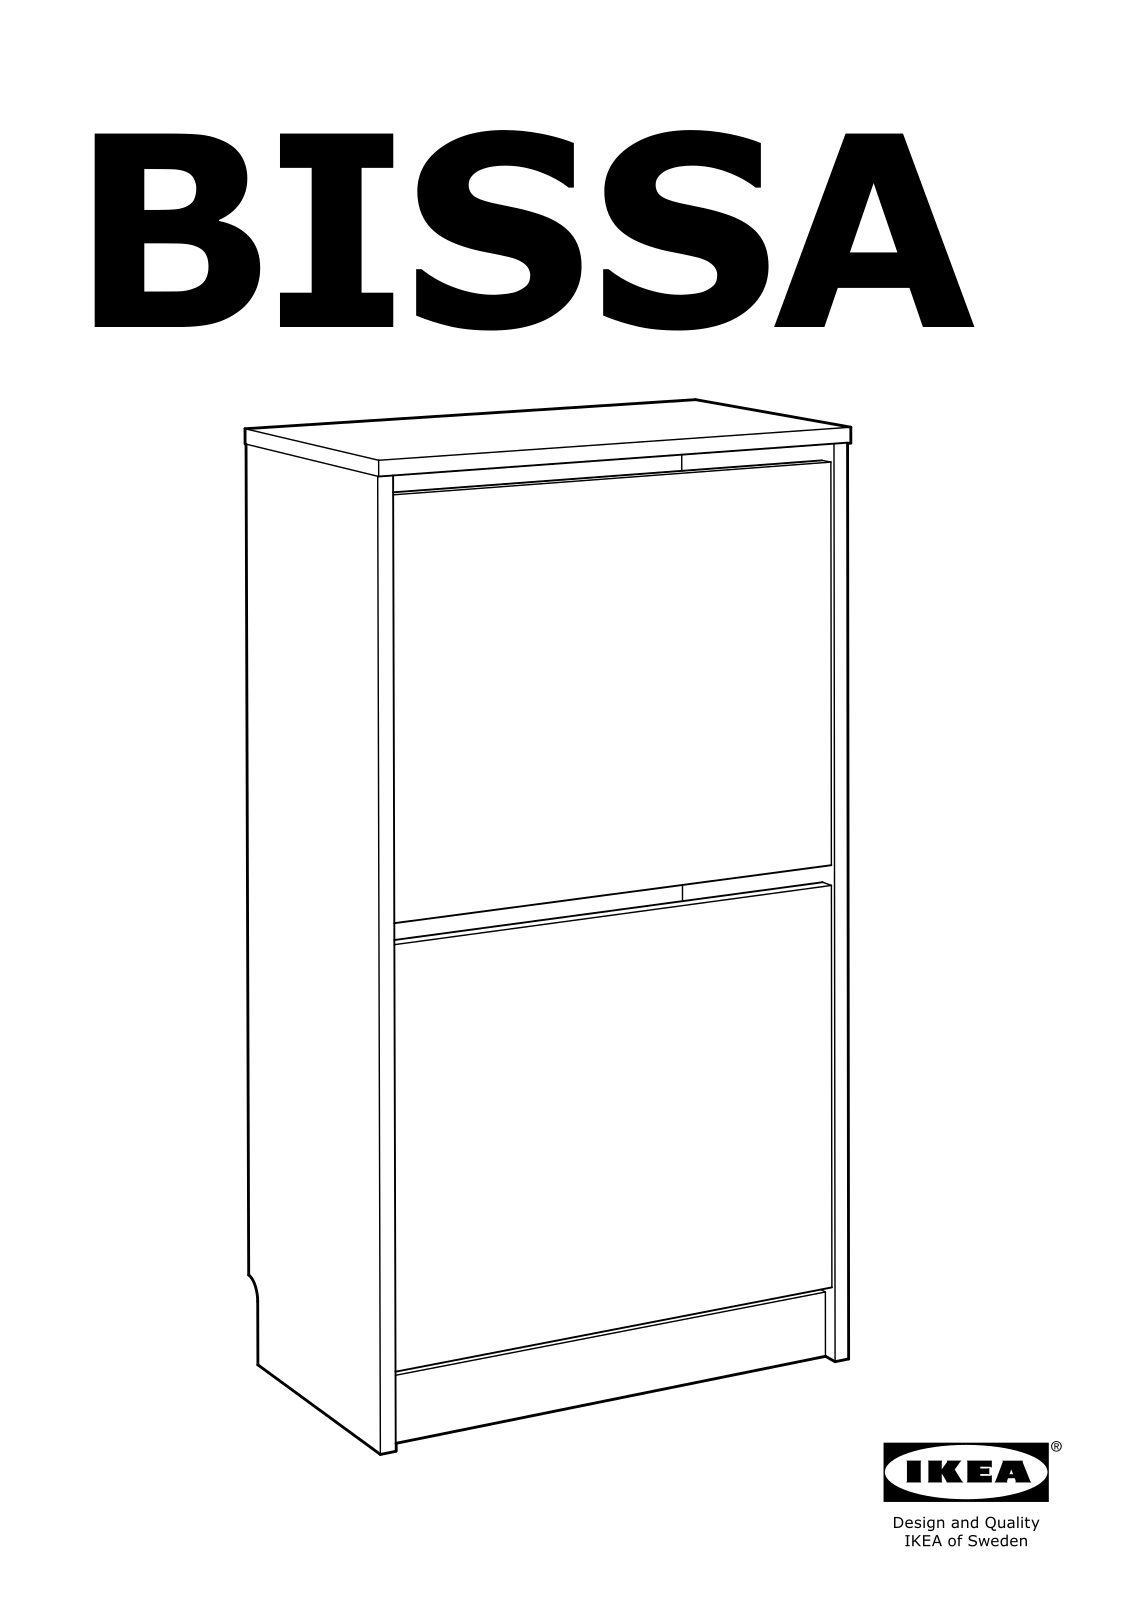 IKEA BISSA User Manual